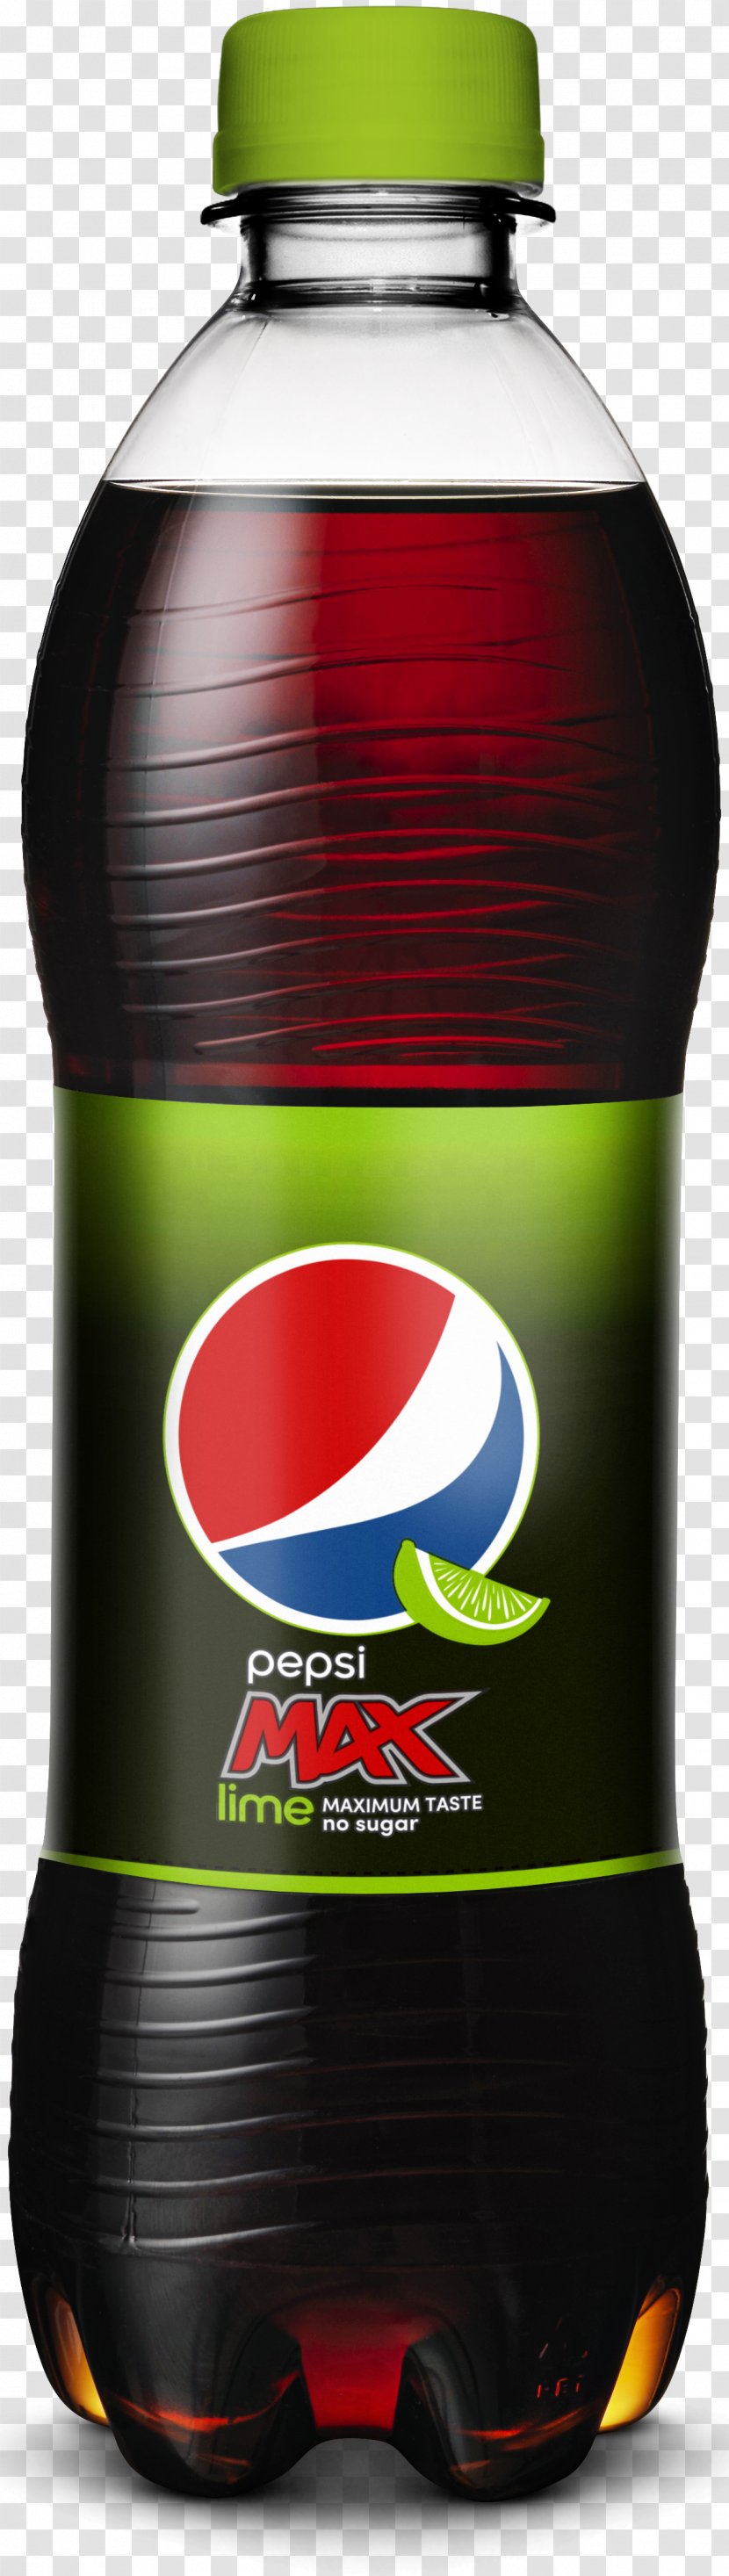 Pepsi Max Fizzy Drinks Lemon-lime Drink Iced Tea Transparent PNG